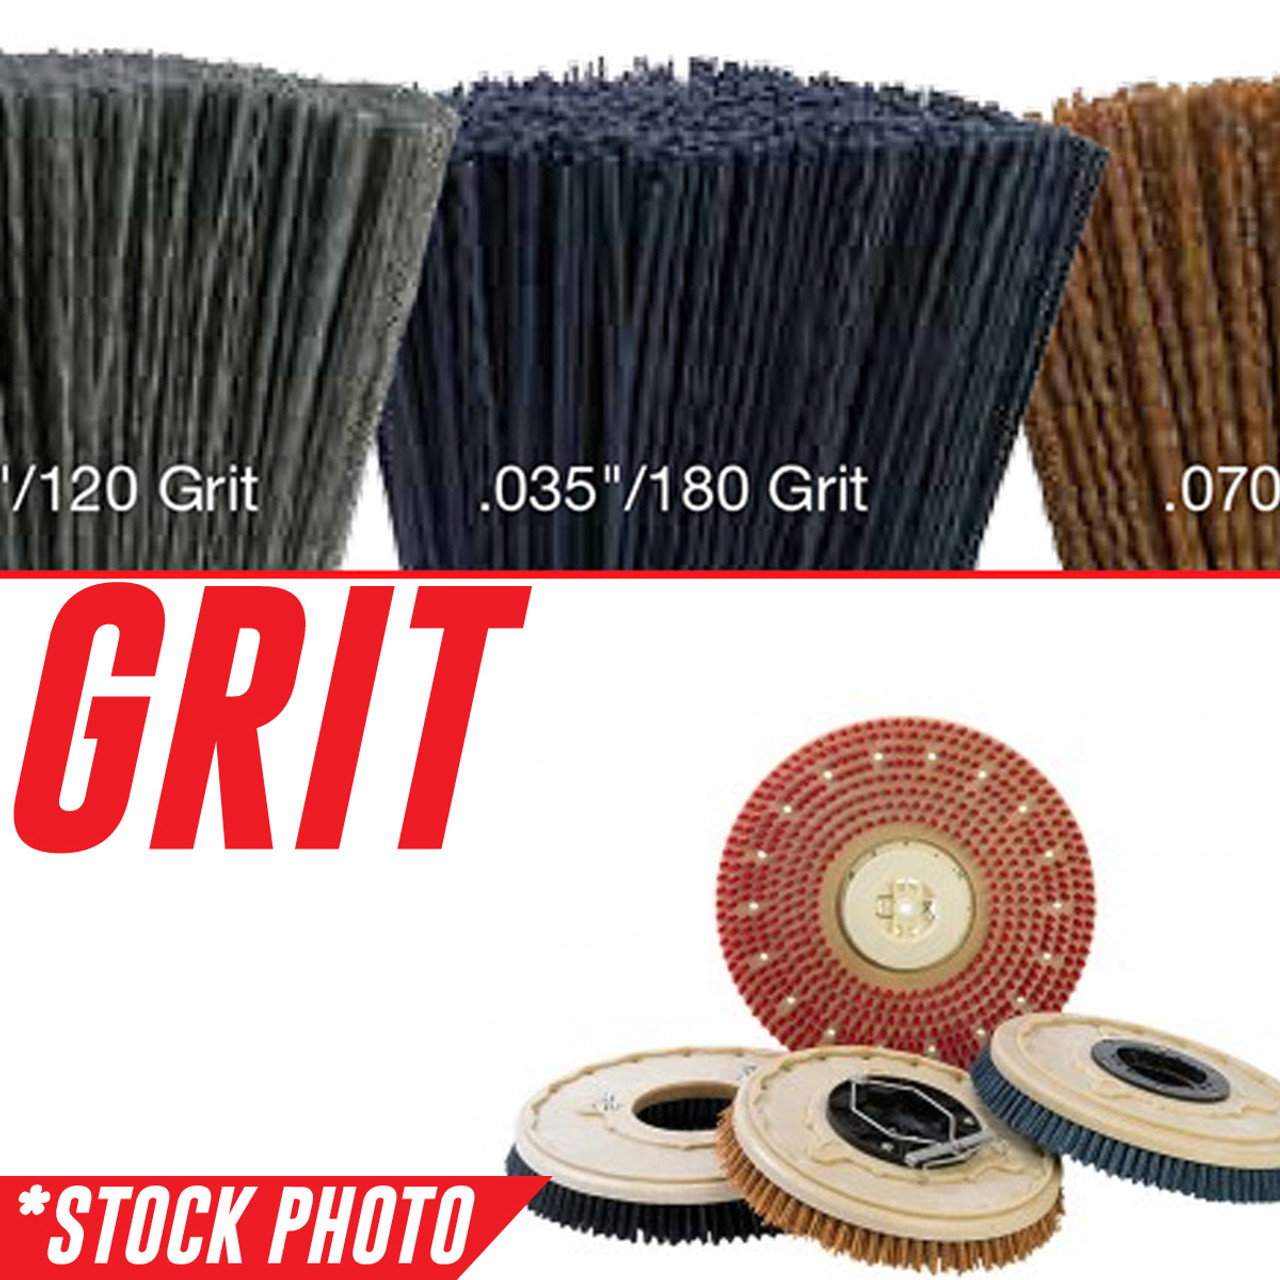 19" Rotary Brush .050"/80 Grit fits International Cleaning Equipment Models i20